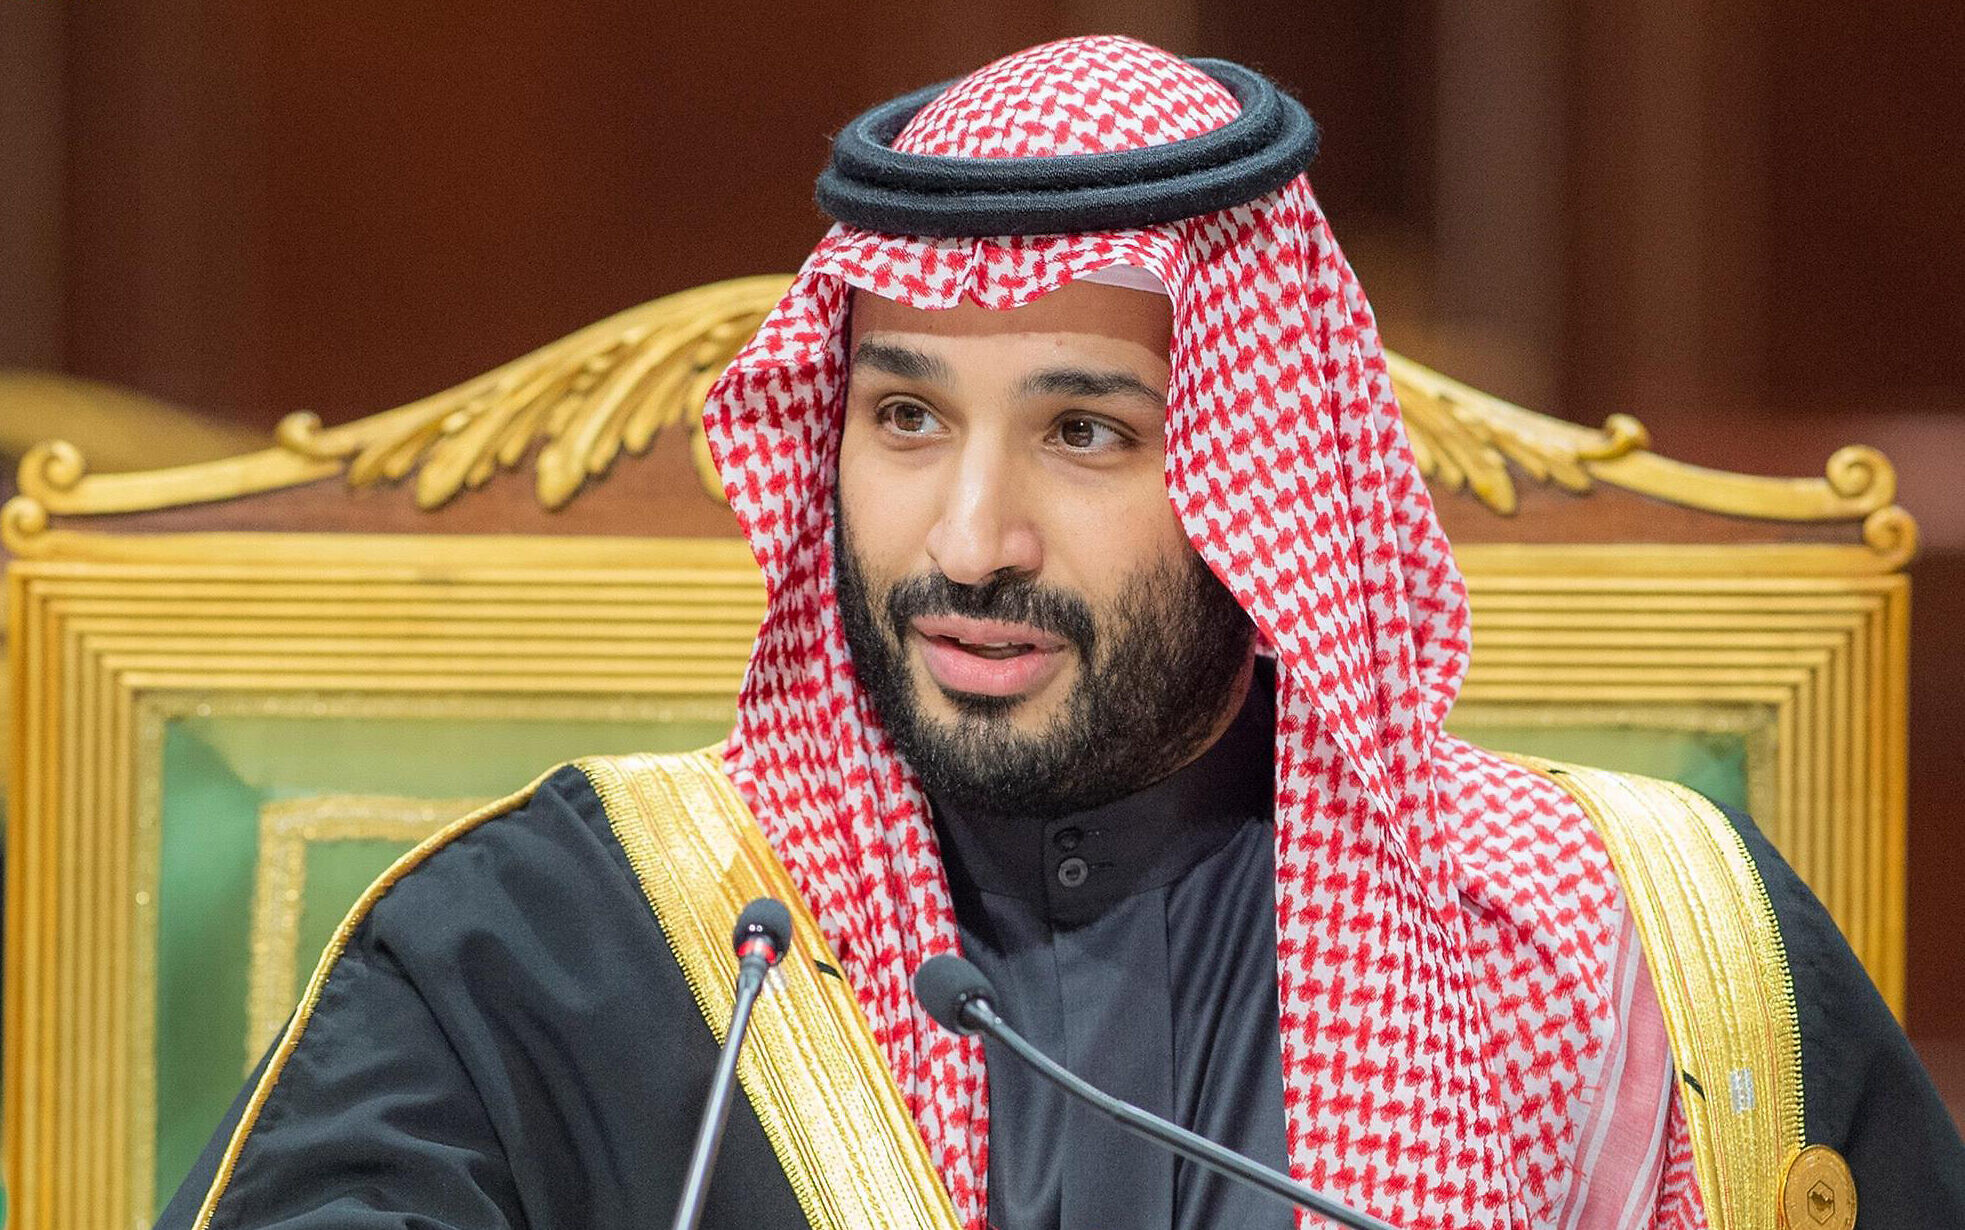 'Sea change' Disruptive Saudi prince shows new pragmatism with Iran